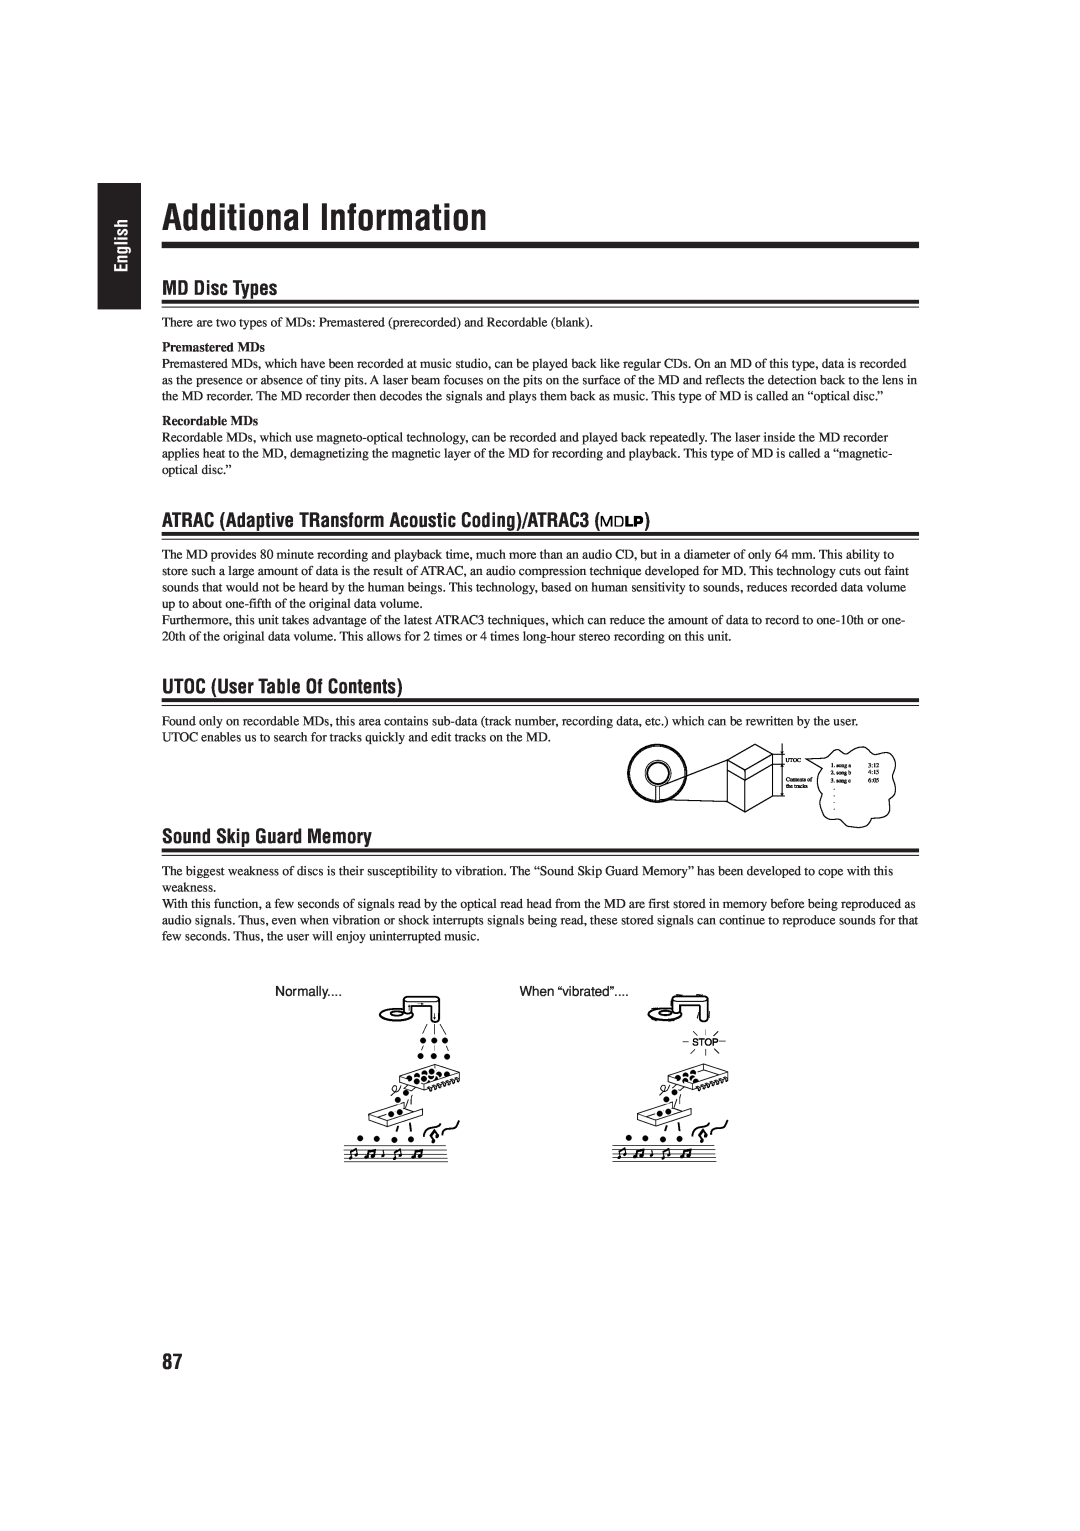 JVC UX-J99DVD manual Additional Information, MD Disc Types, ATRAC Adaptive TRansform Acoustic Coding/ATRAC3, English 